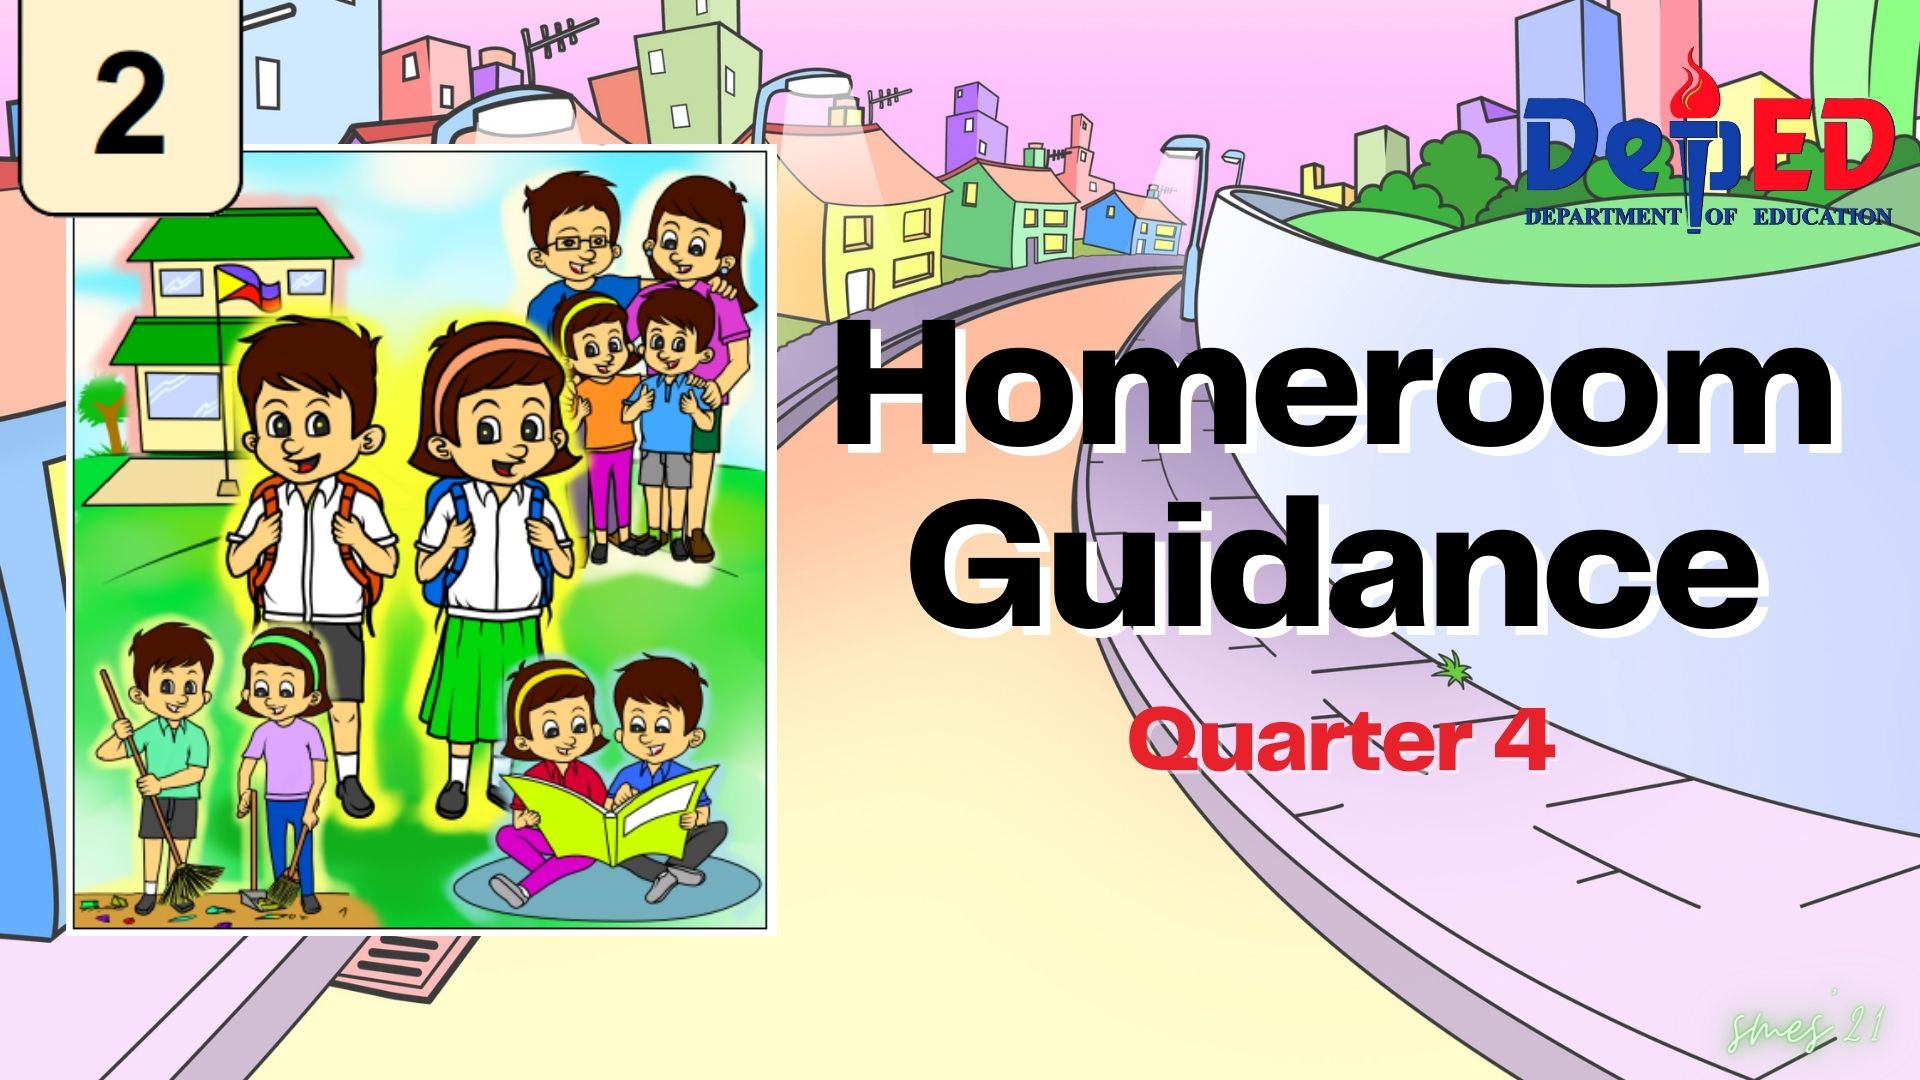 G2 - Homeroom Guidance Quarter 4 - MISS GEPILA